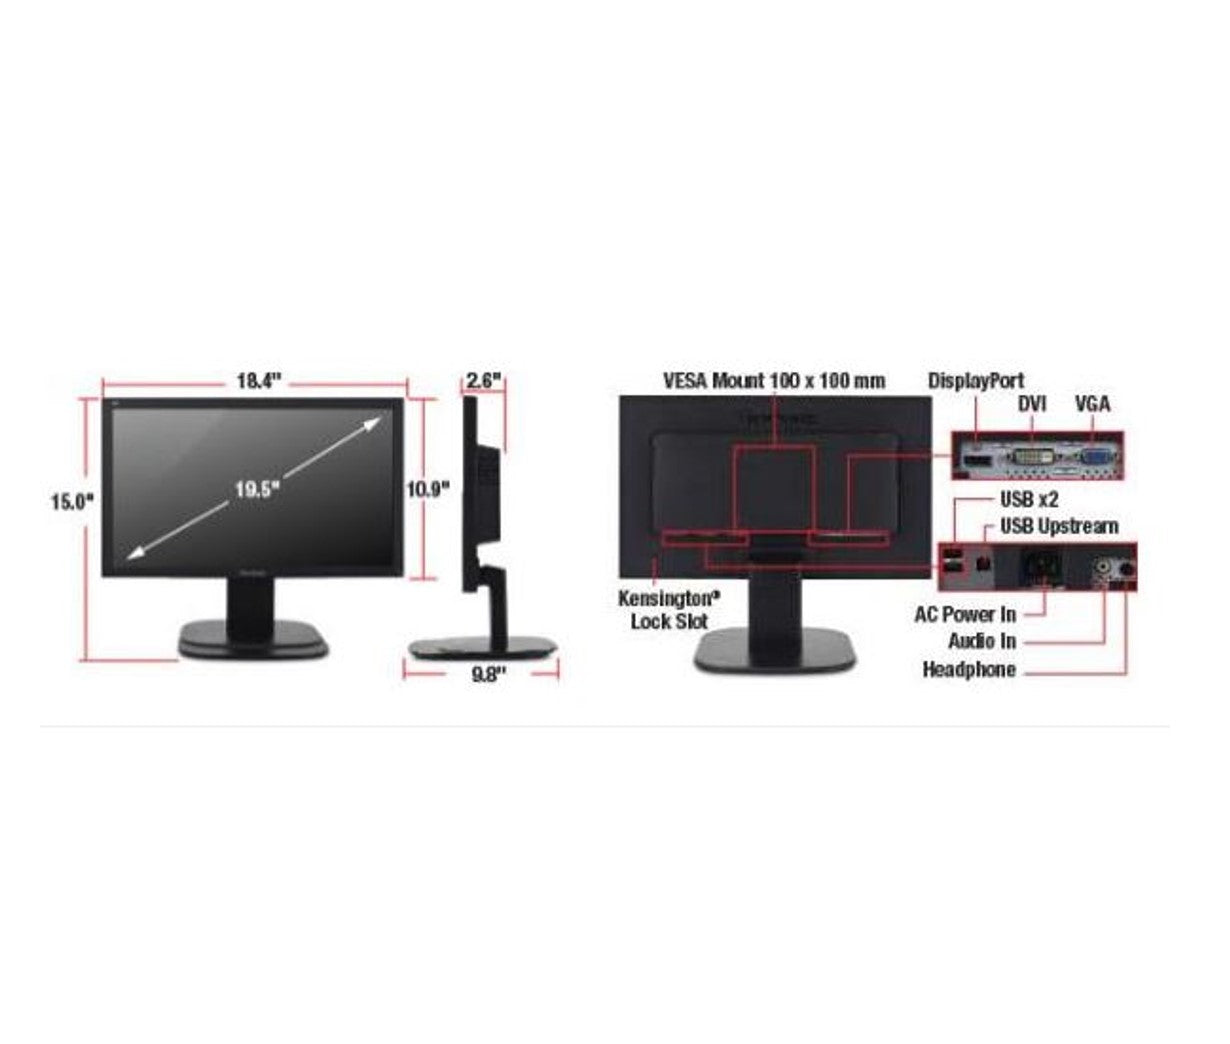 ViewSonic VG2039M-LED-R 20" Ergonomic Monitor - C Grade Refurbished